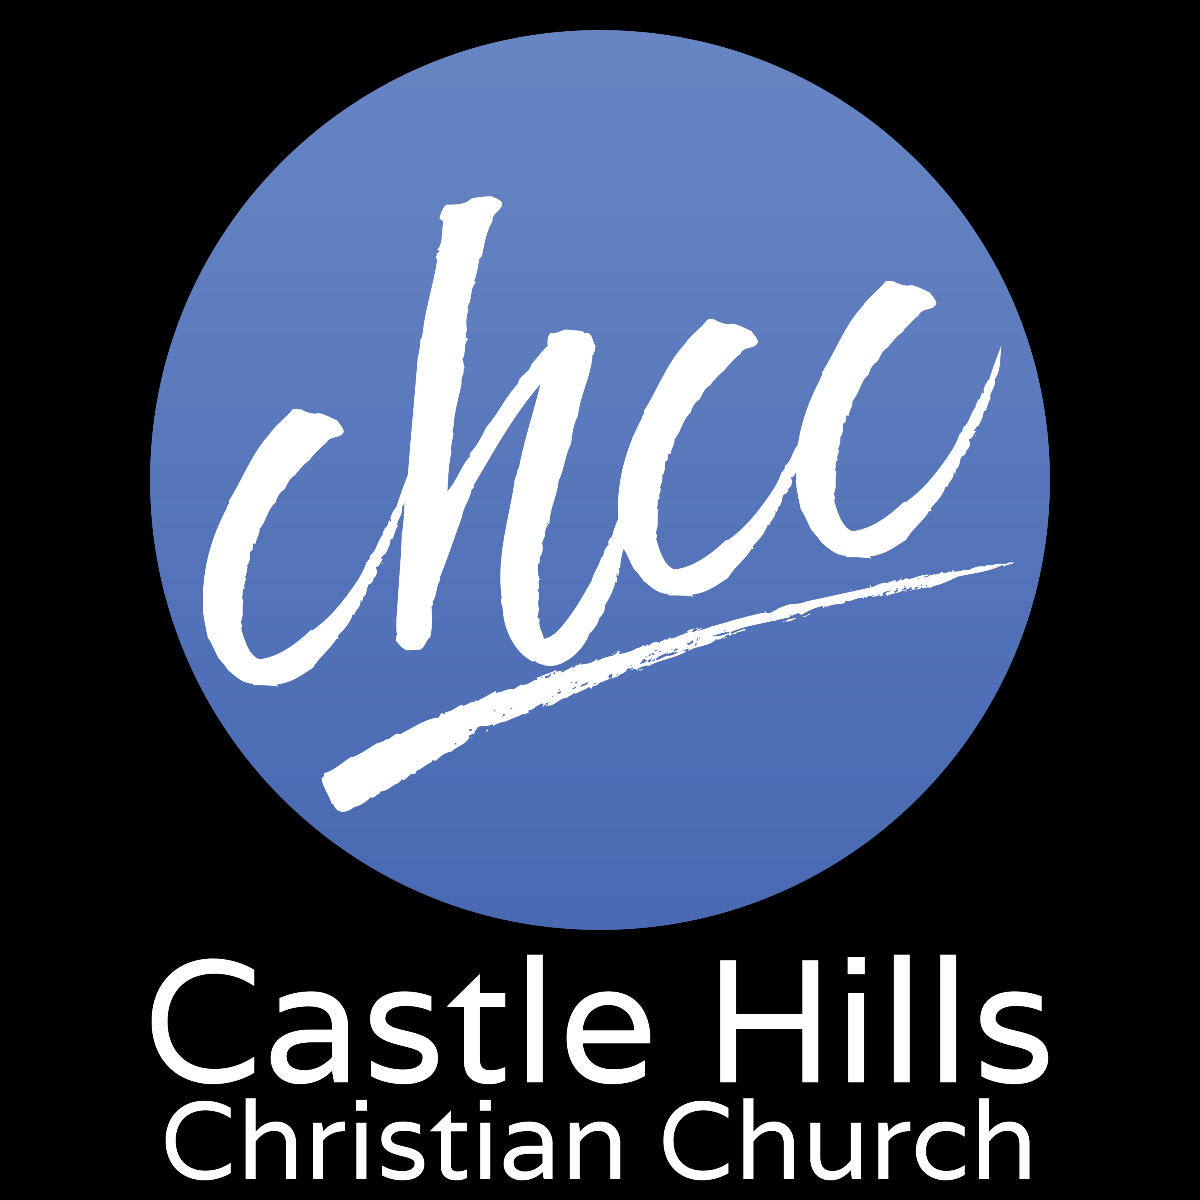 CASTLE HILLS CHRISTIAN CHURCH